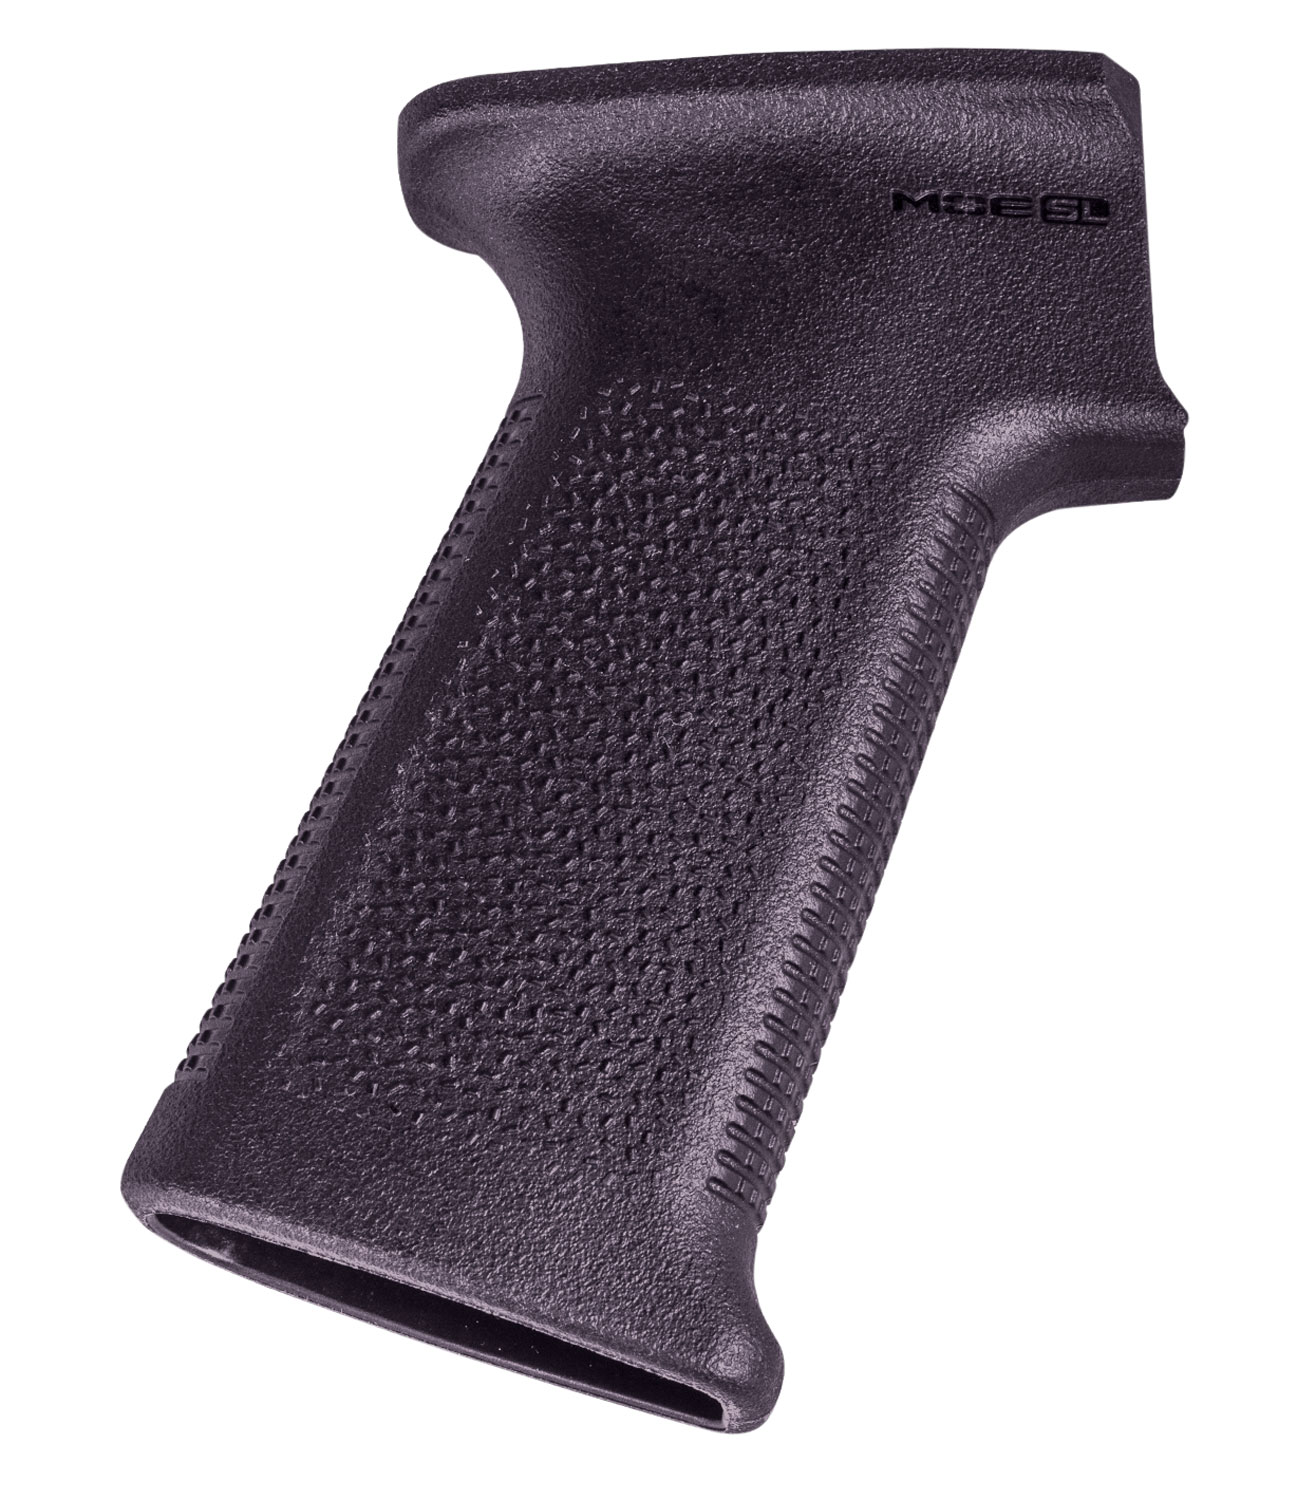 Magpul MAG682-PLM MOE SL Grip Aggressive Textured Plum Polymer for AK-47, AK-74